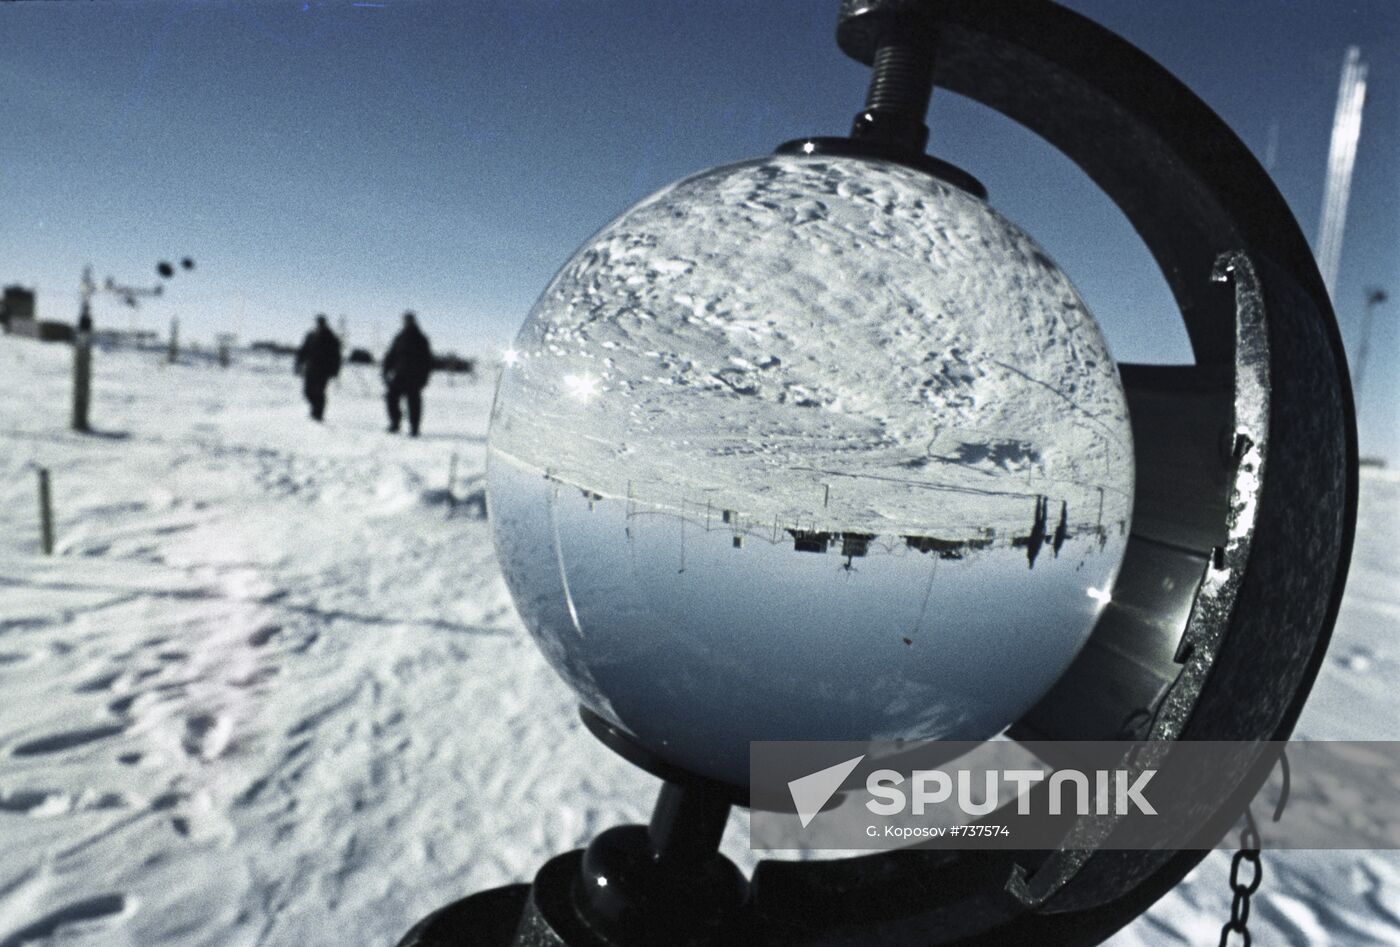 Vostok Antarctic station